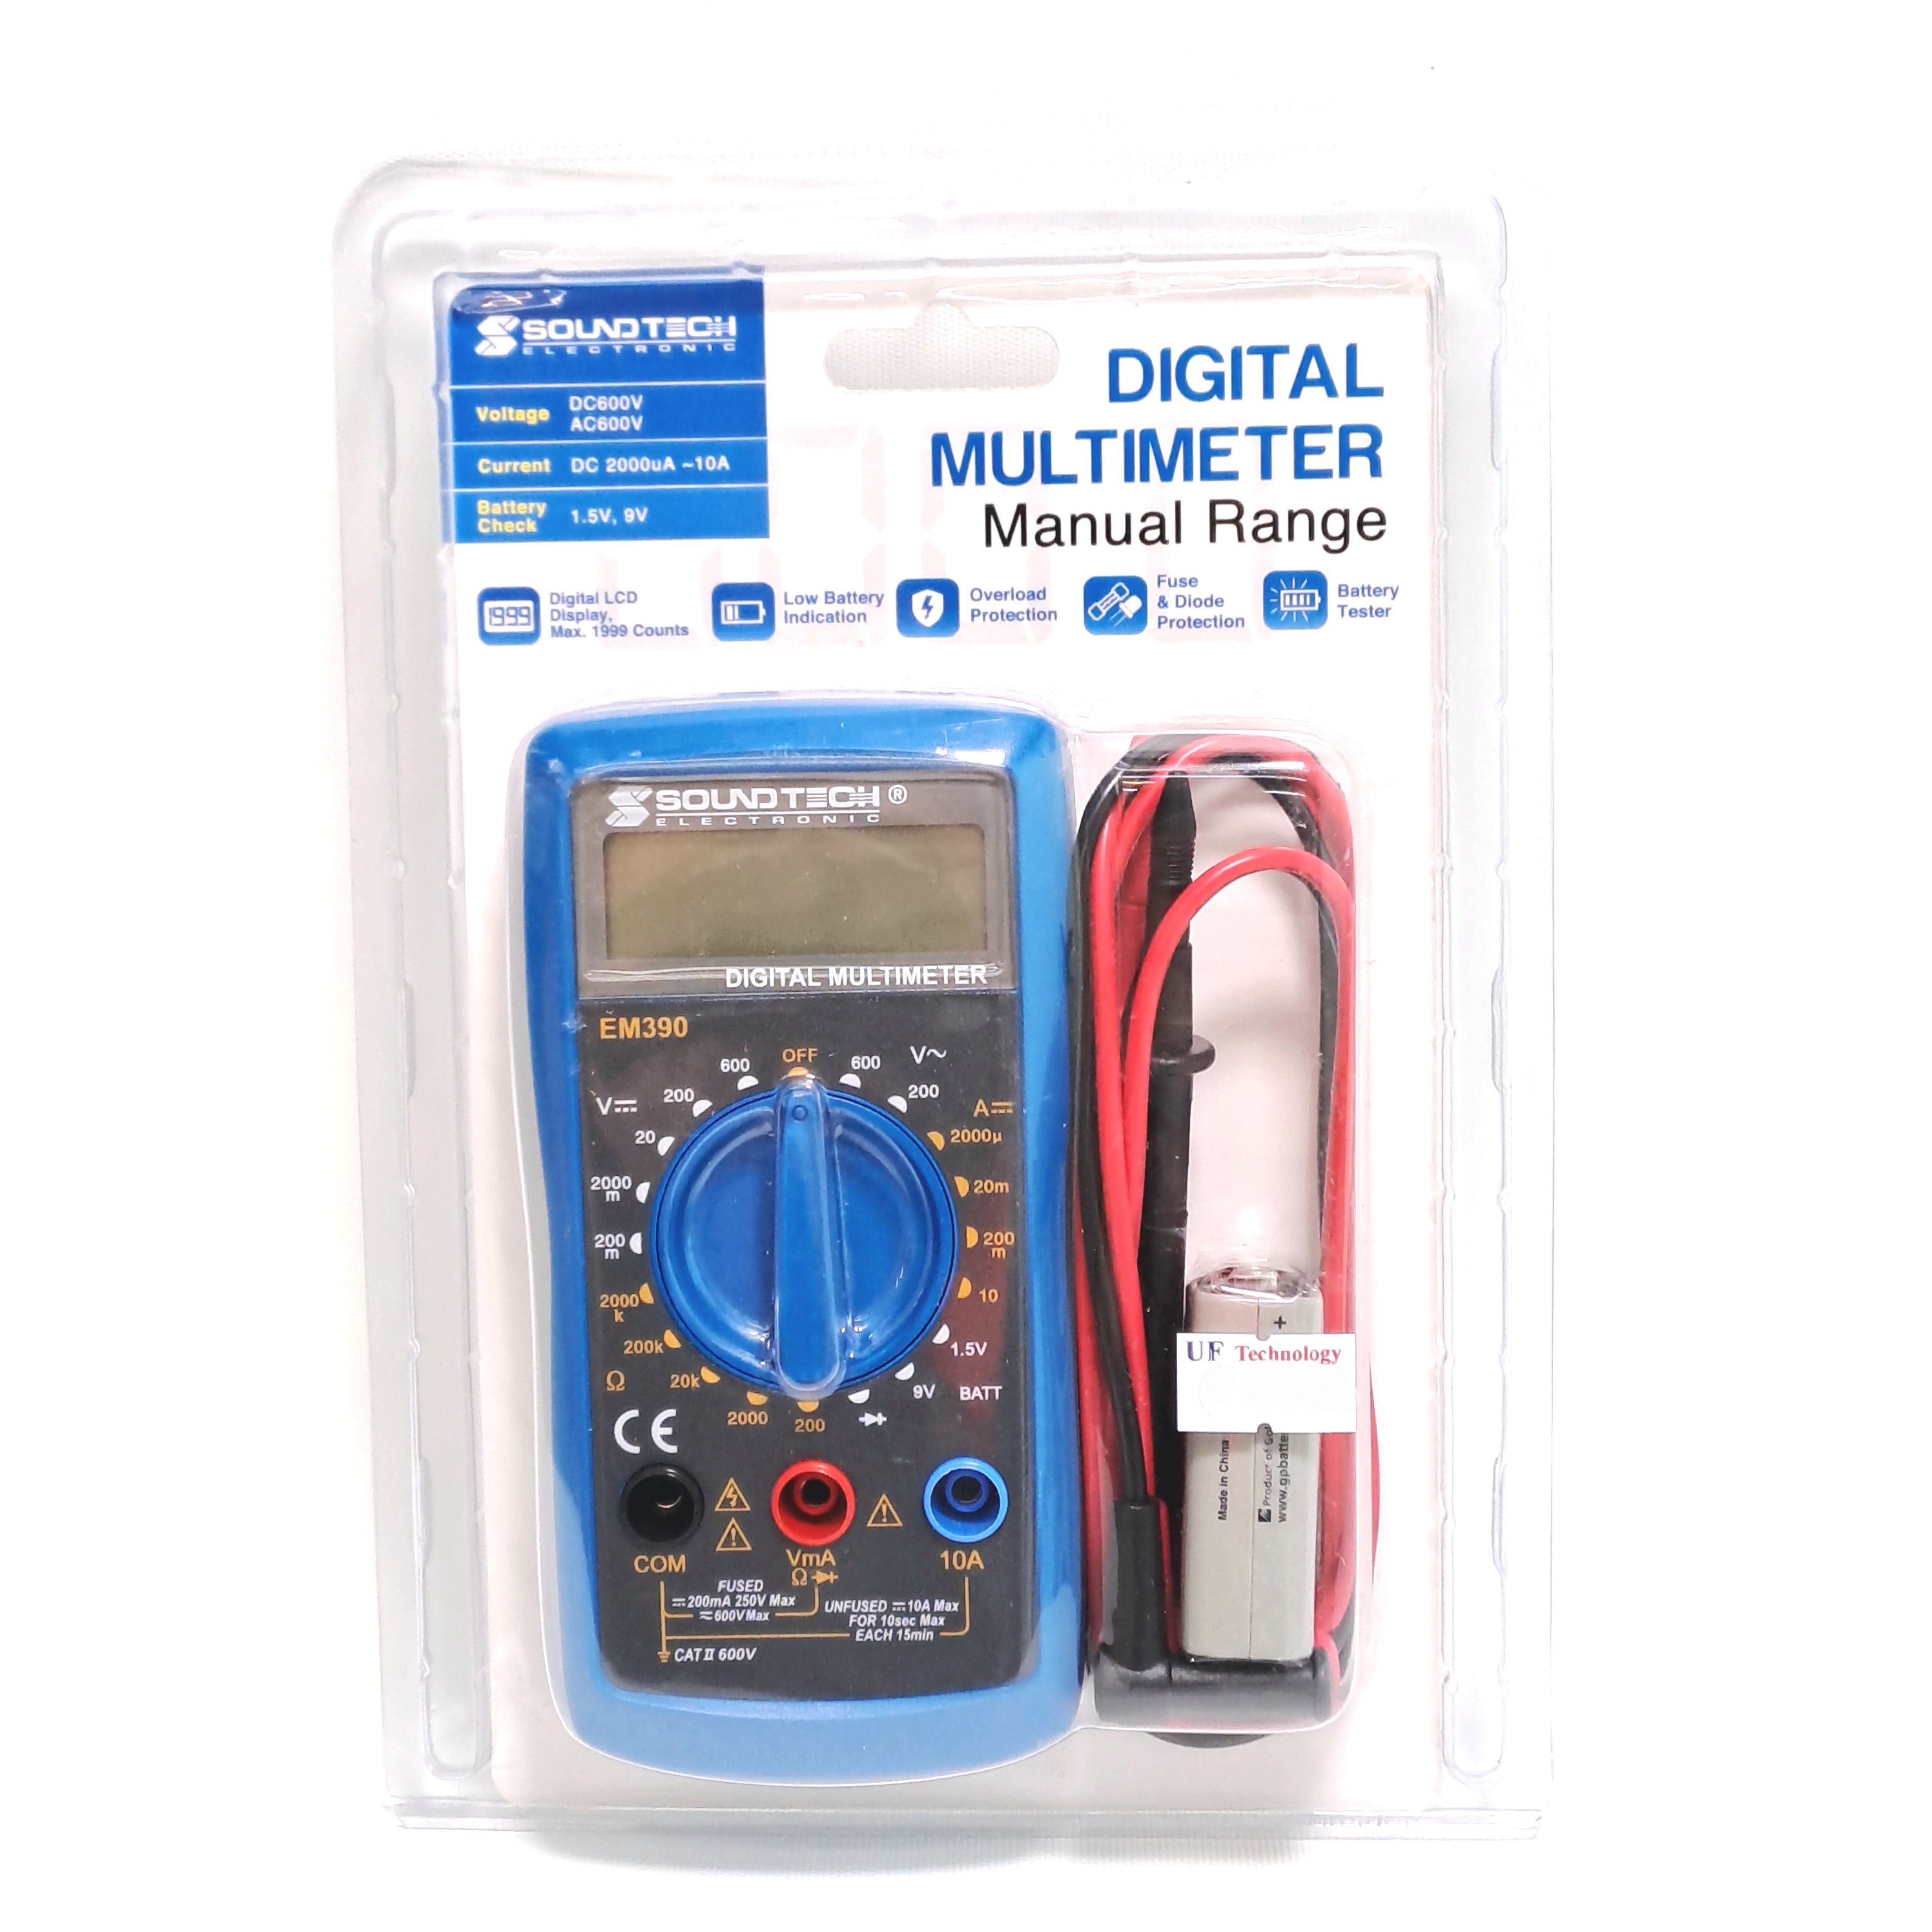 Soundtech Digital Multimeter